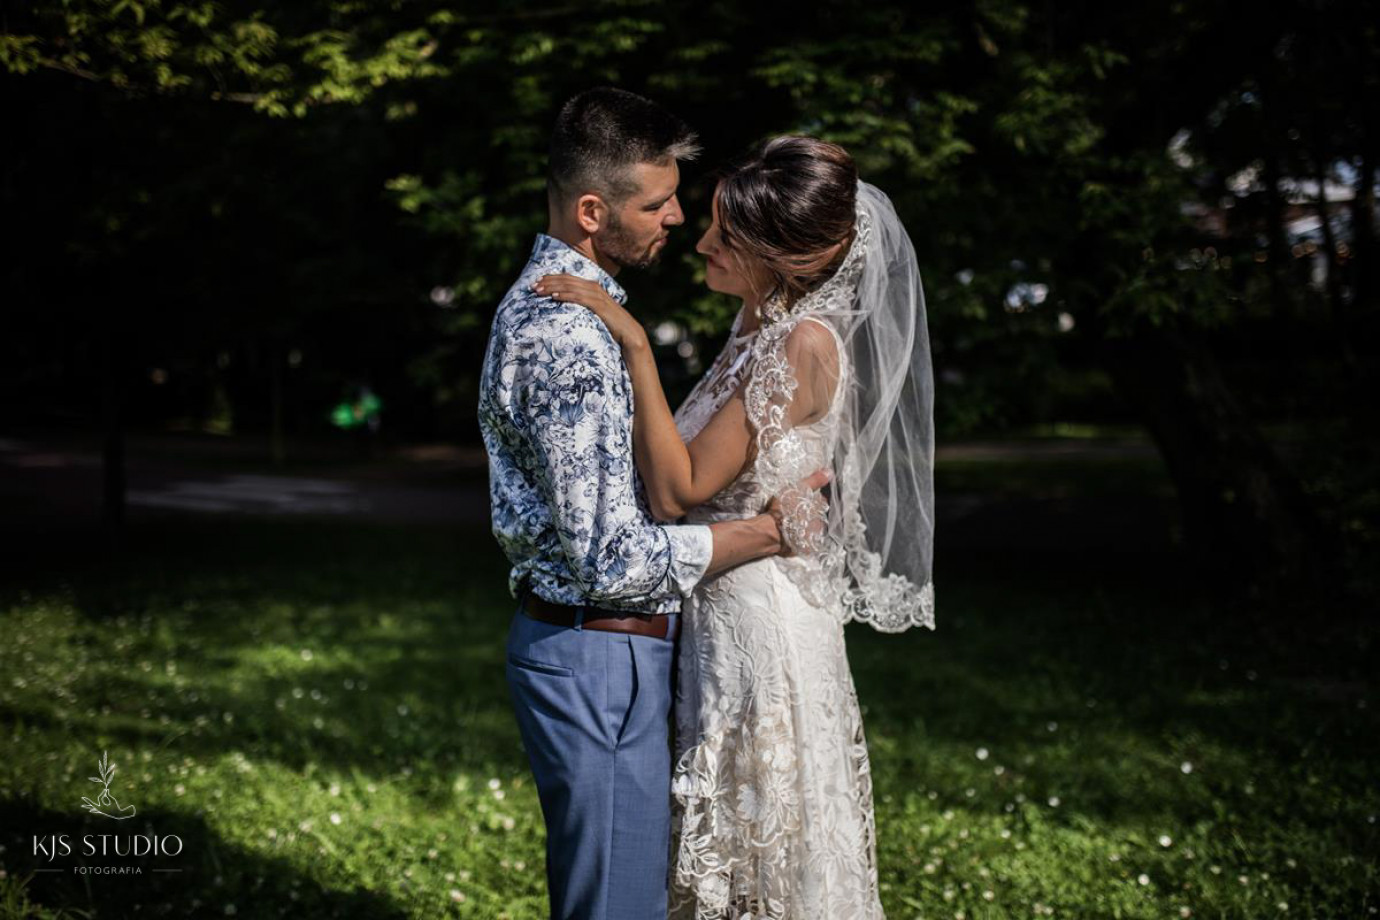 fotograf gdansk kjs-fotografia portfolio zdjecia slubne inspiracje wesele plener slubny sesja slubna